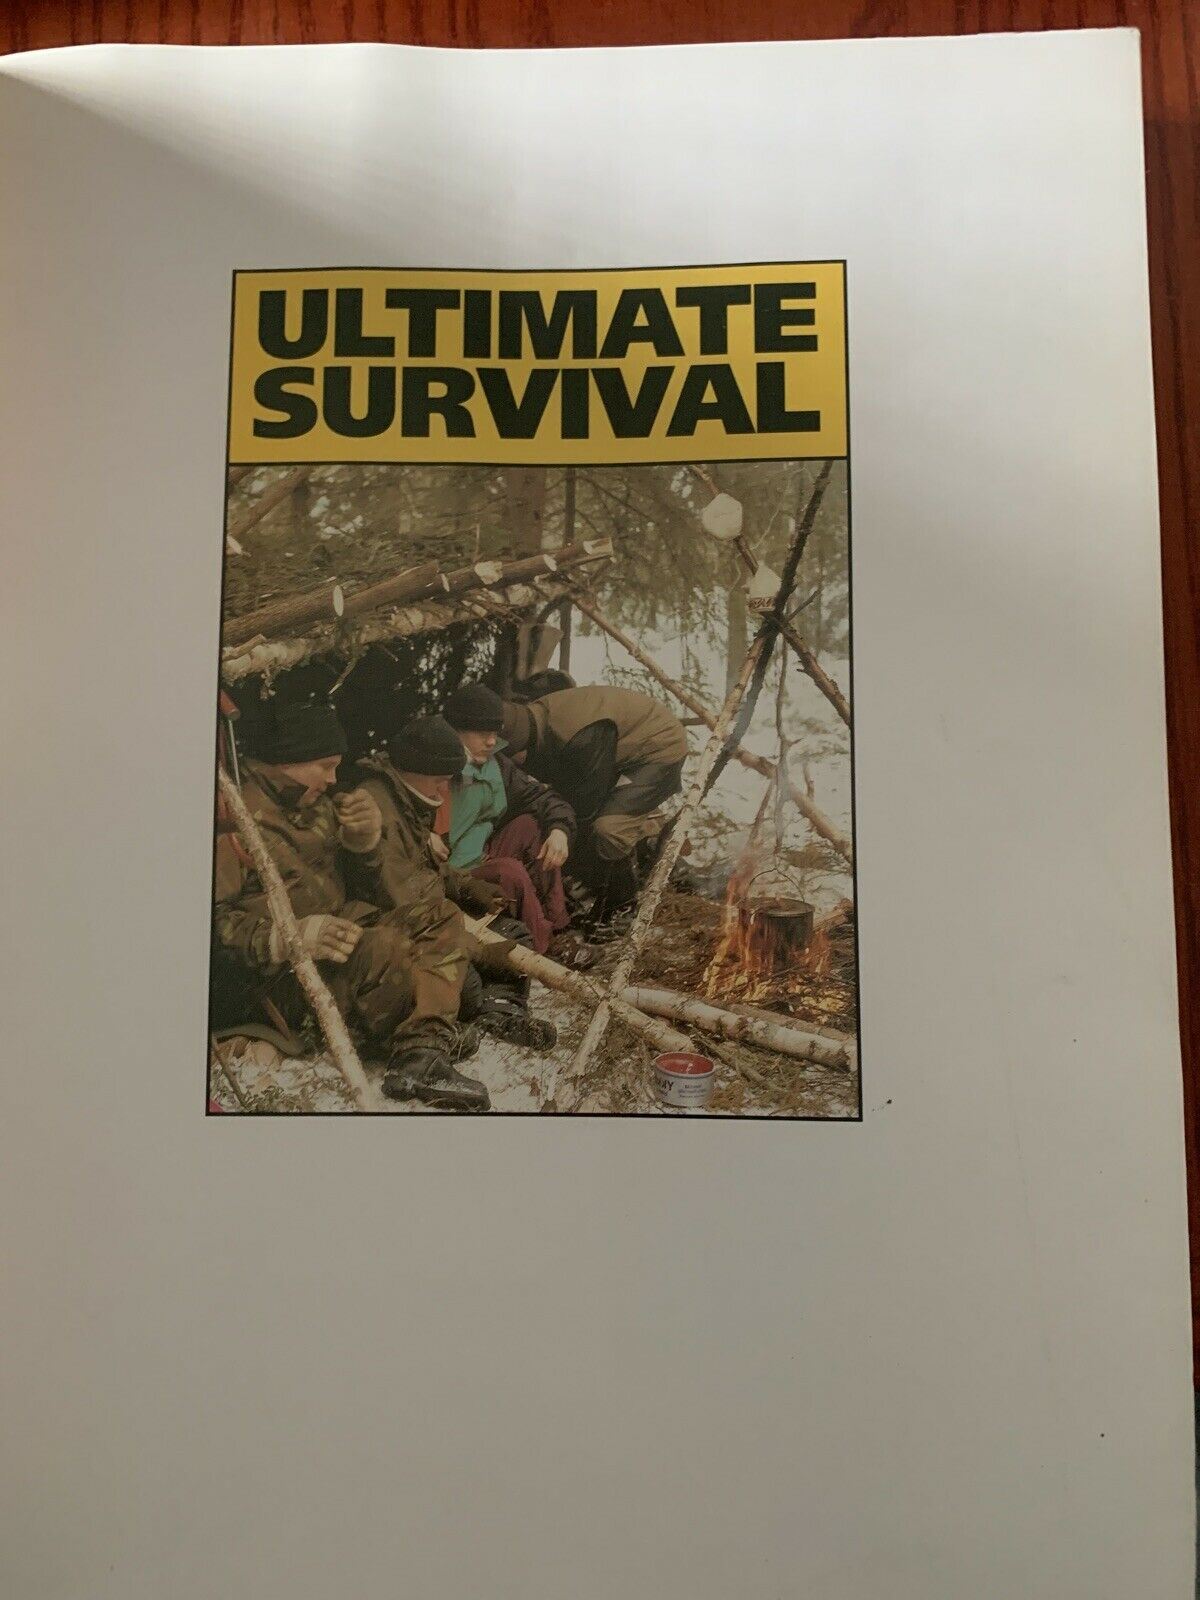 Ultimate Survival By Anthonio Akkermans,Bill Mattos,Bob Morrison,Harry Cook,Hel